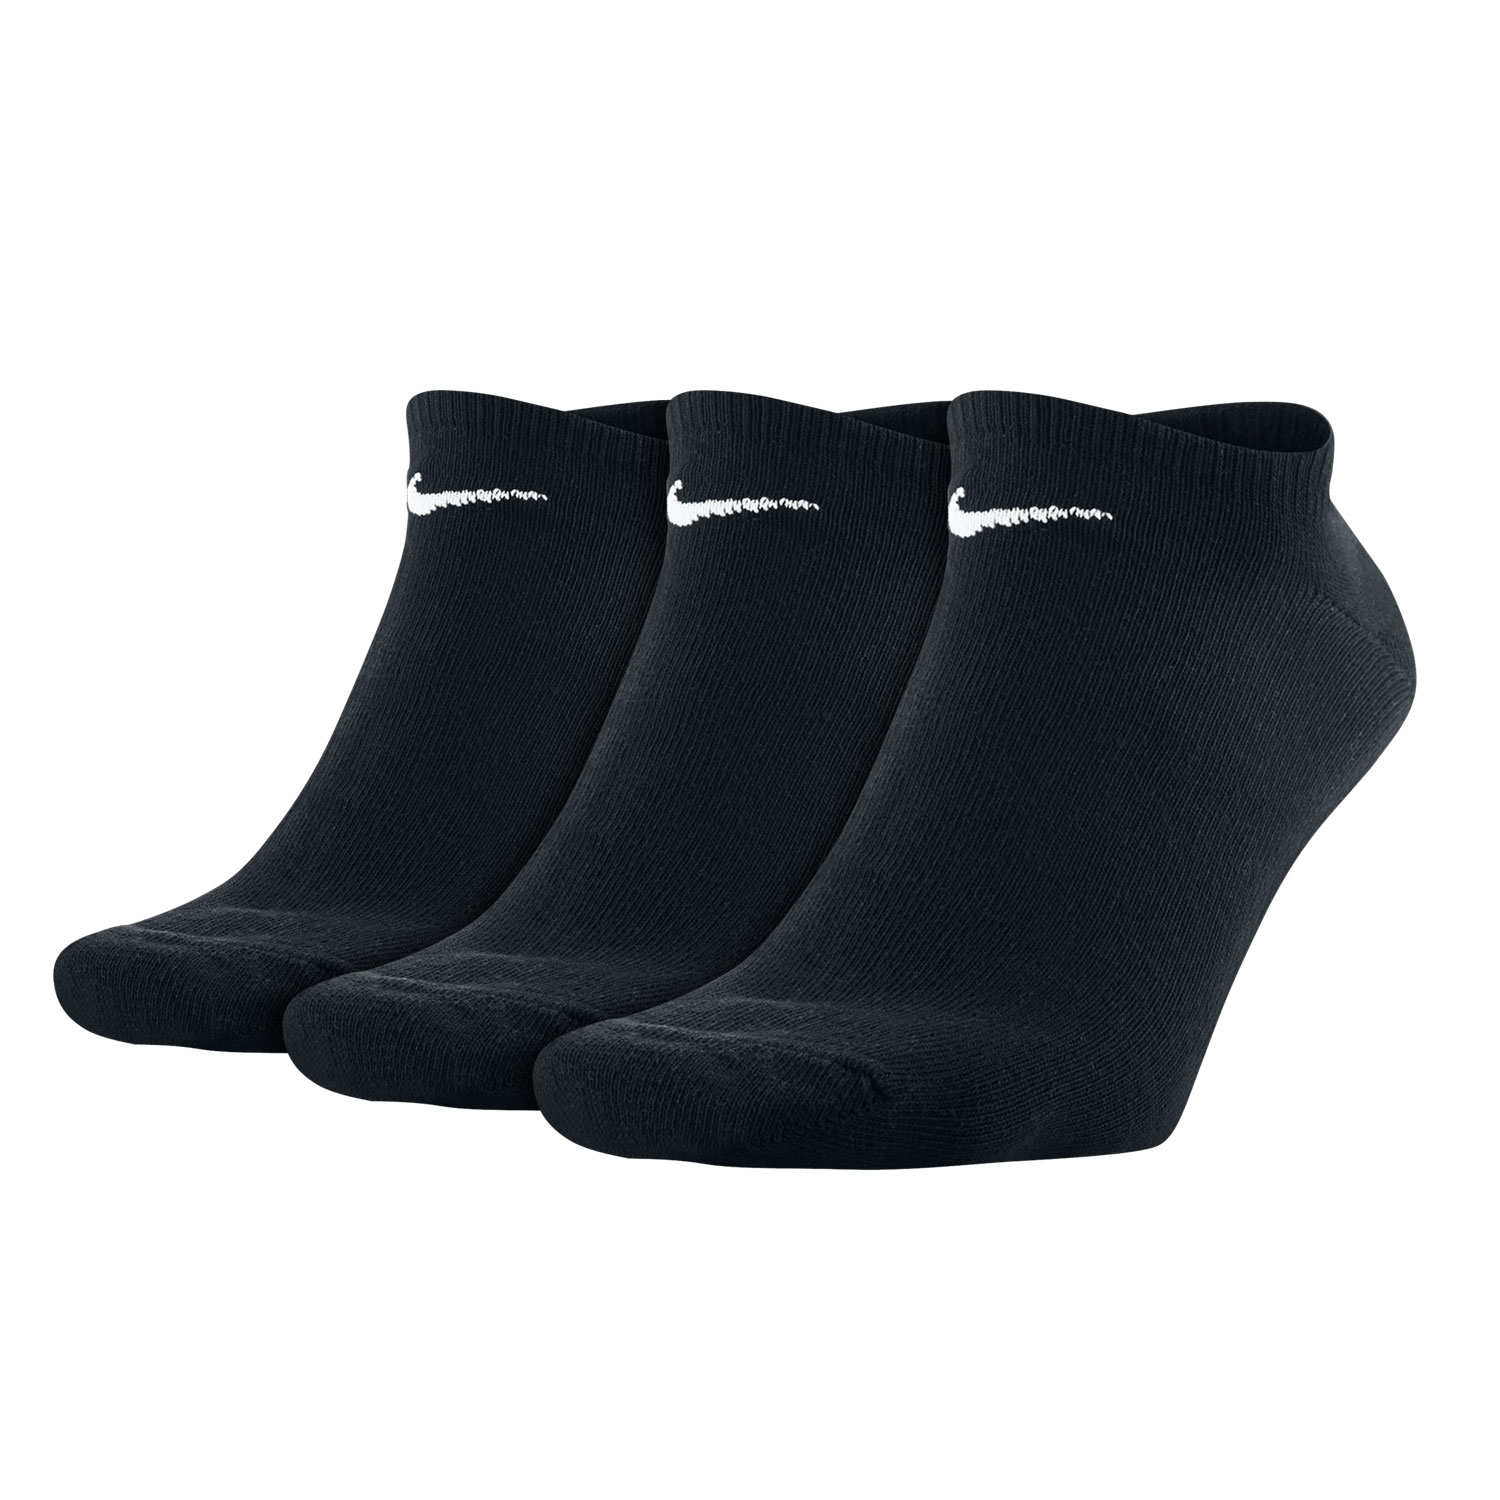 Nike Low Classic Socks - Black/White